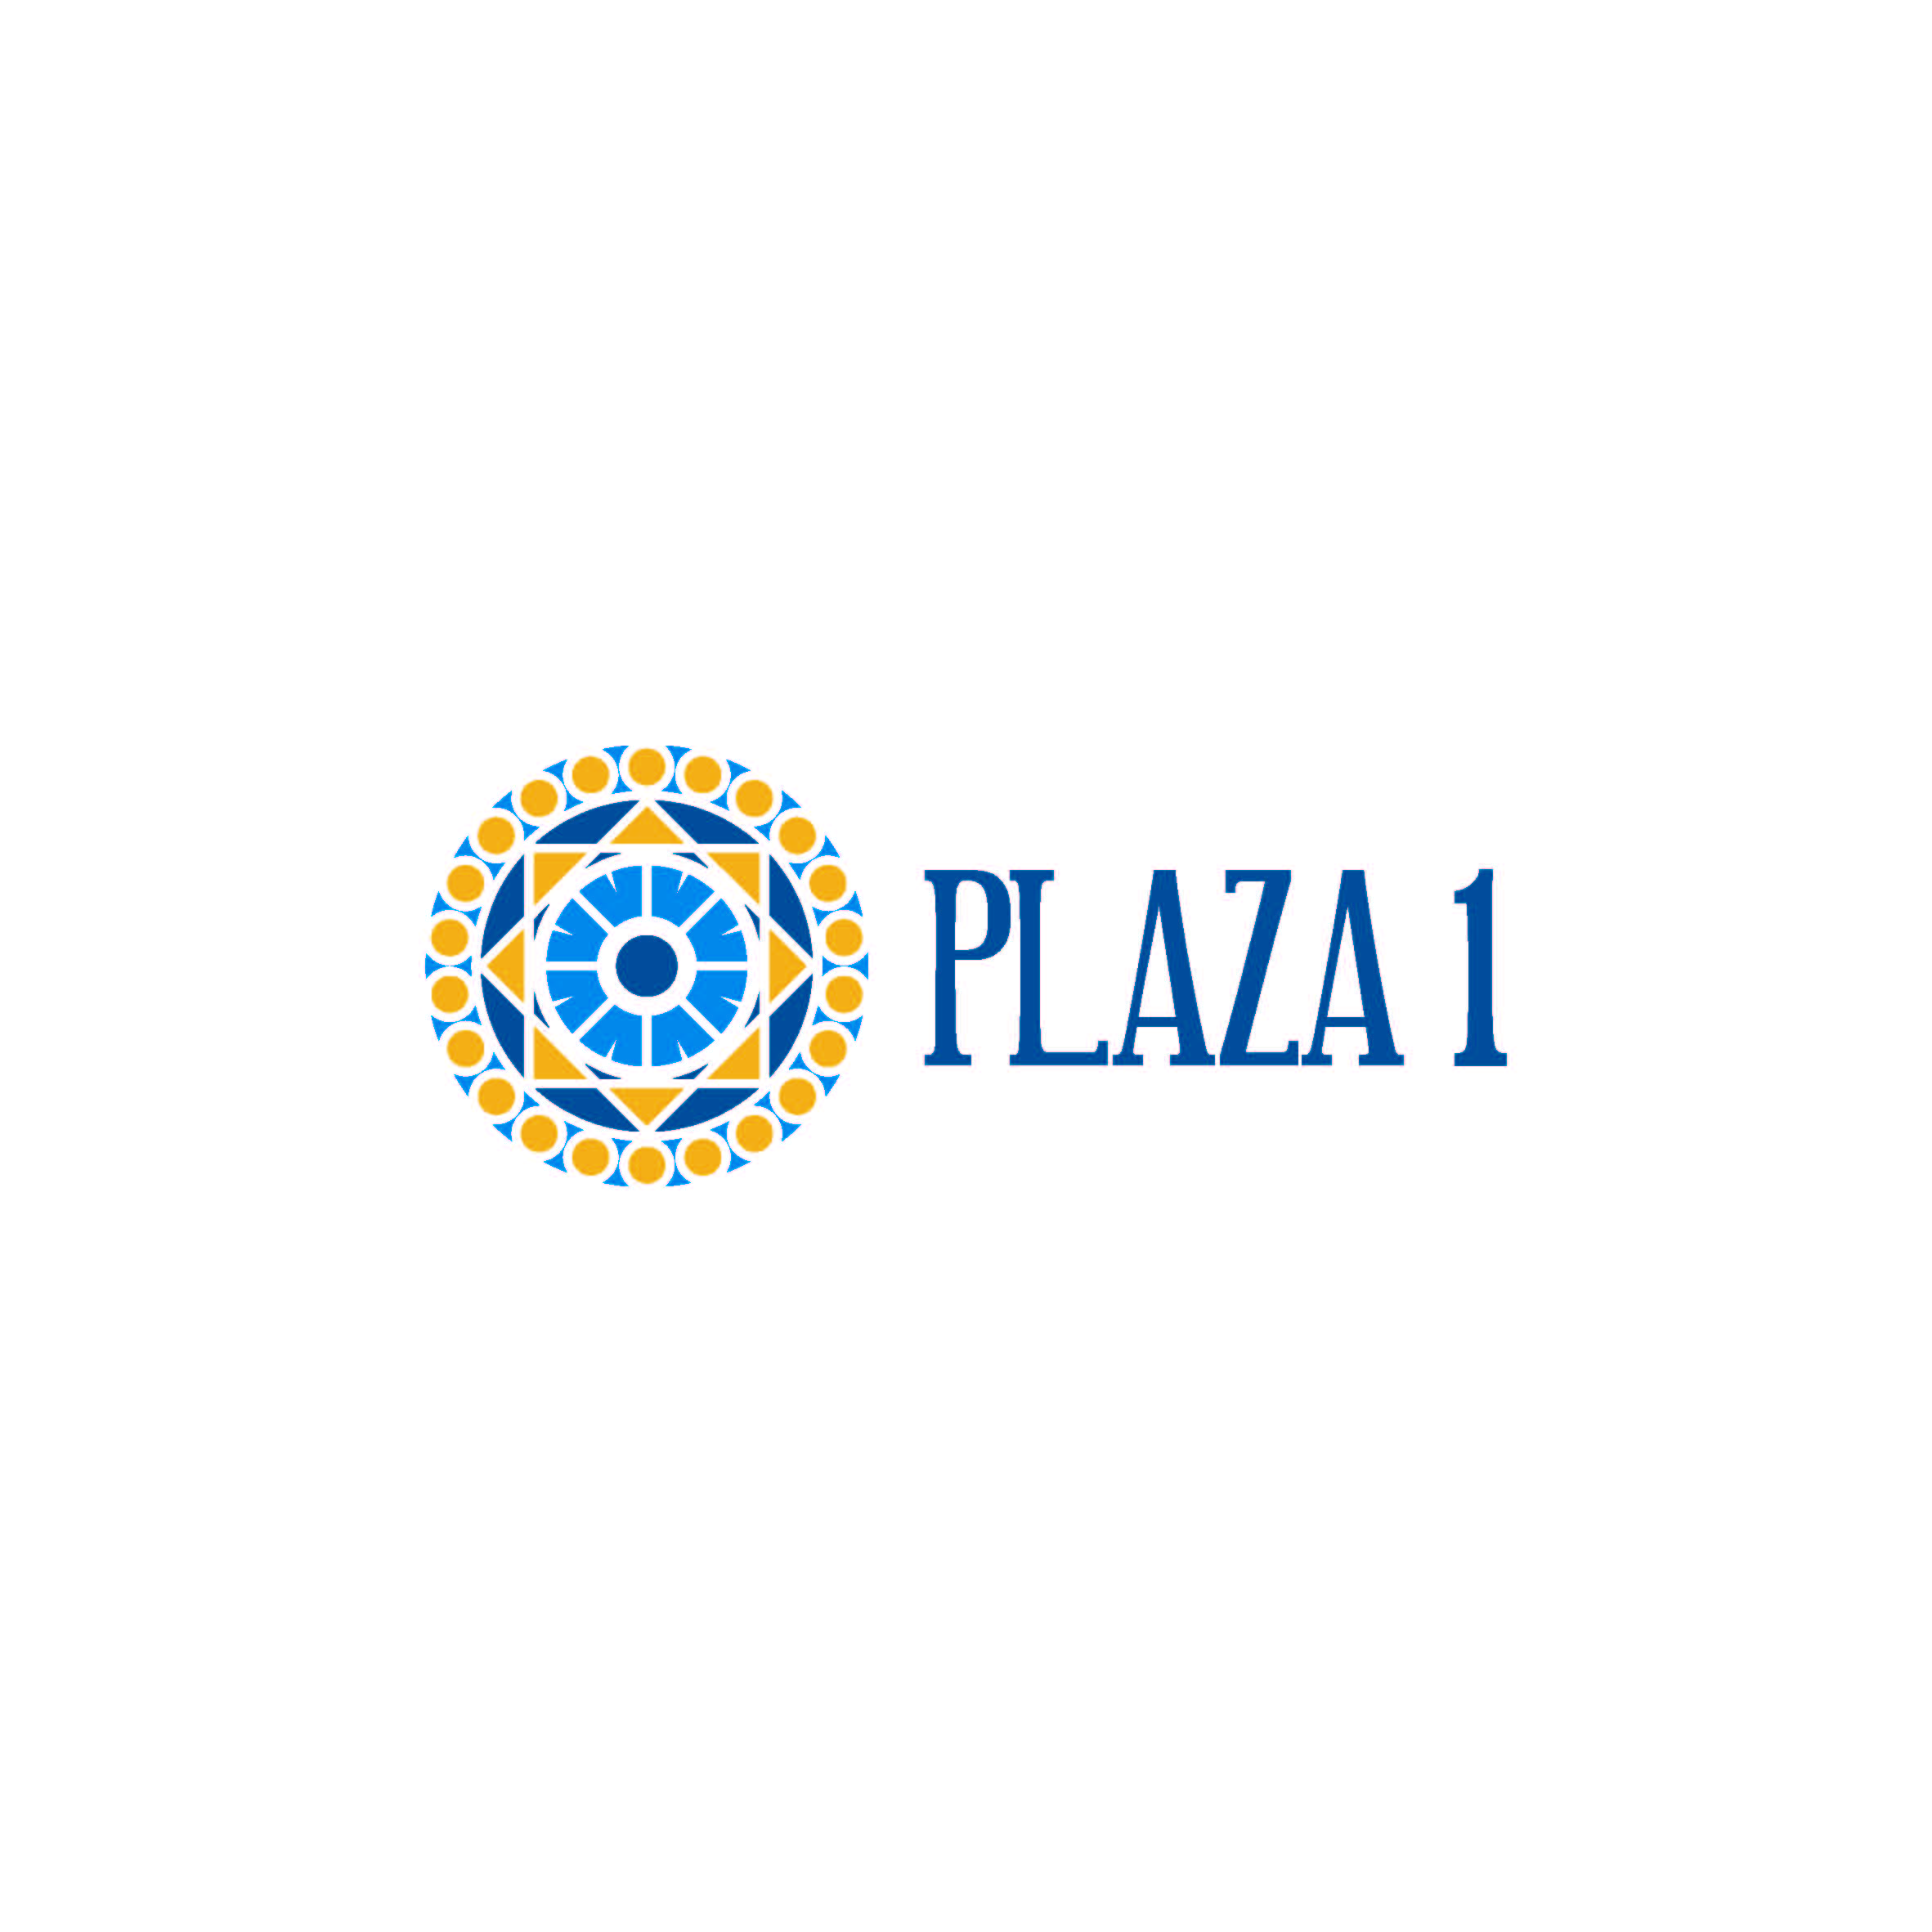 Plaza 1